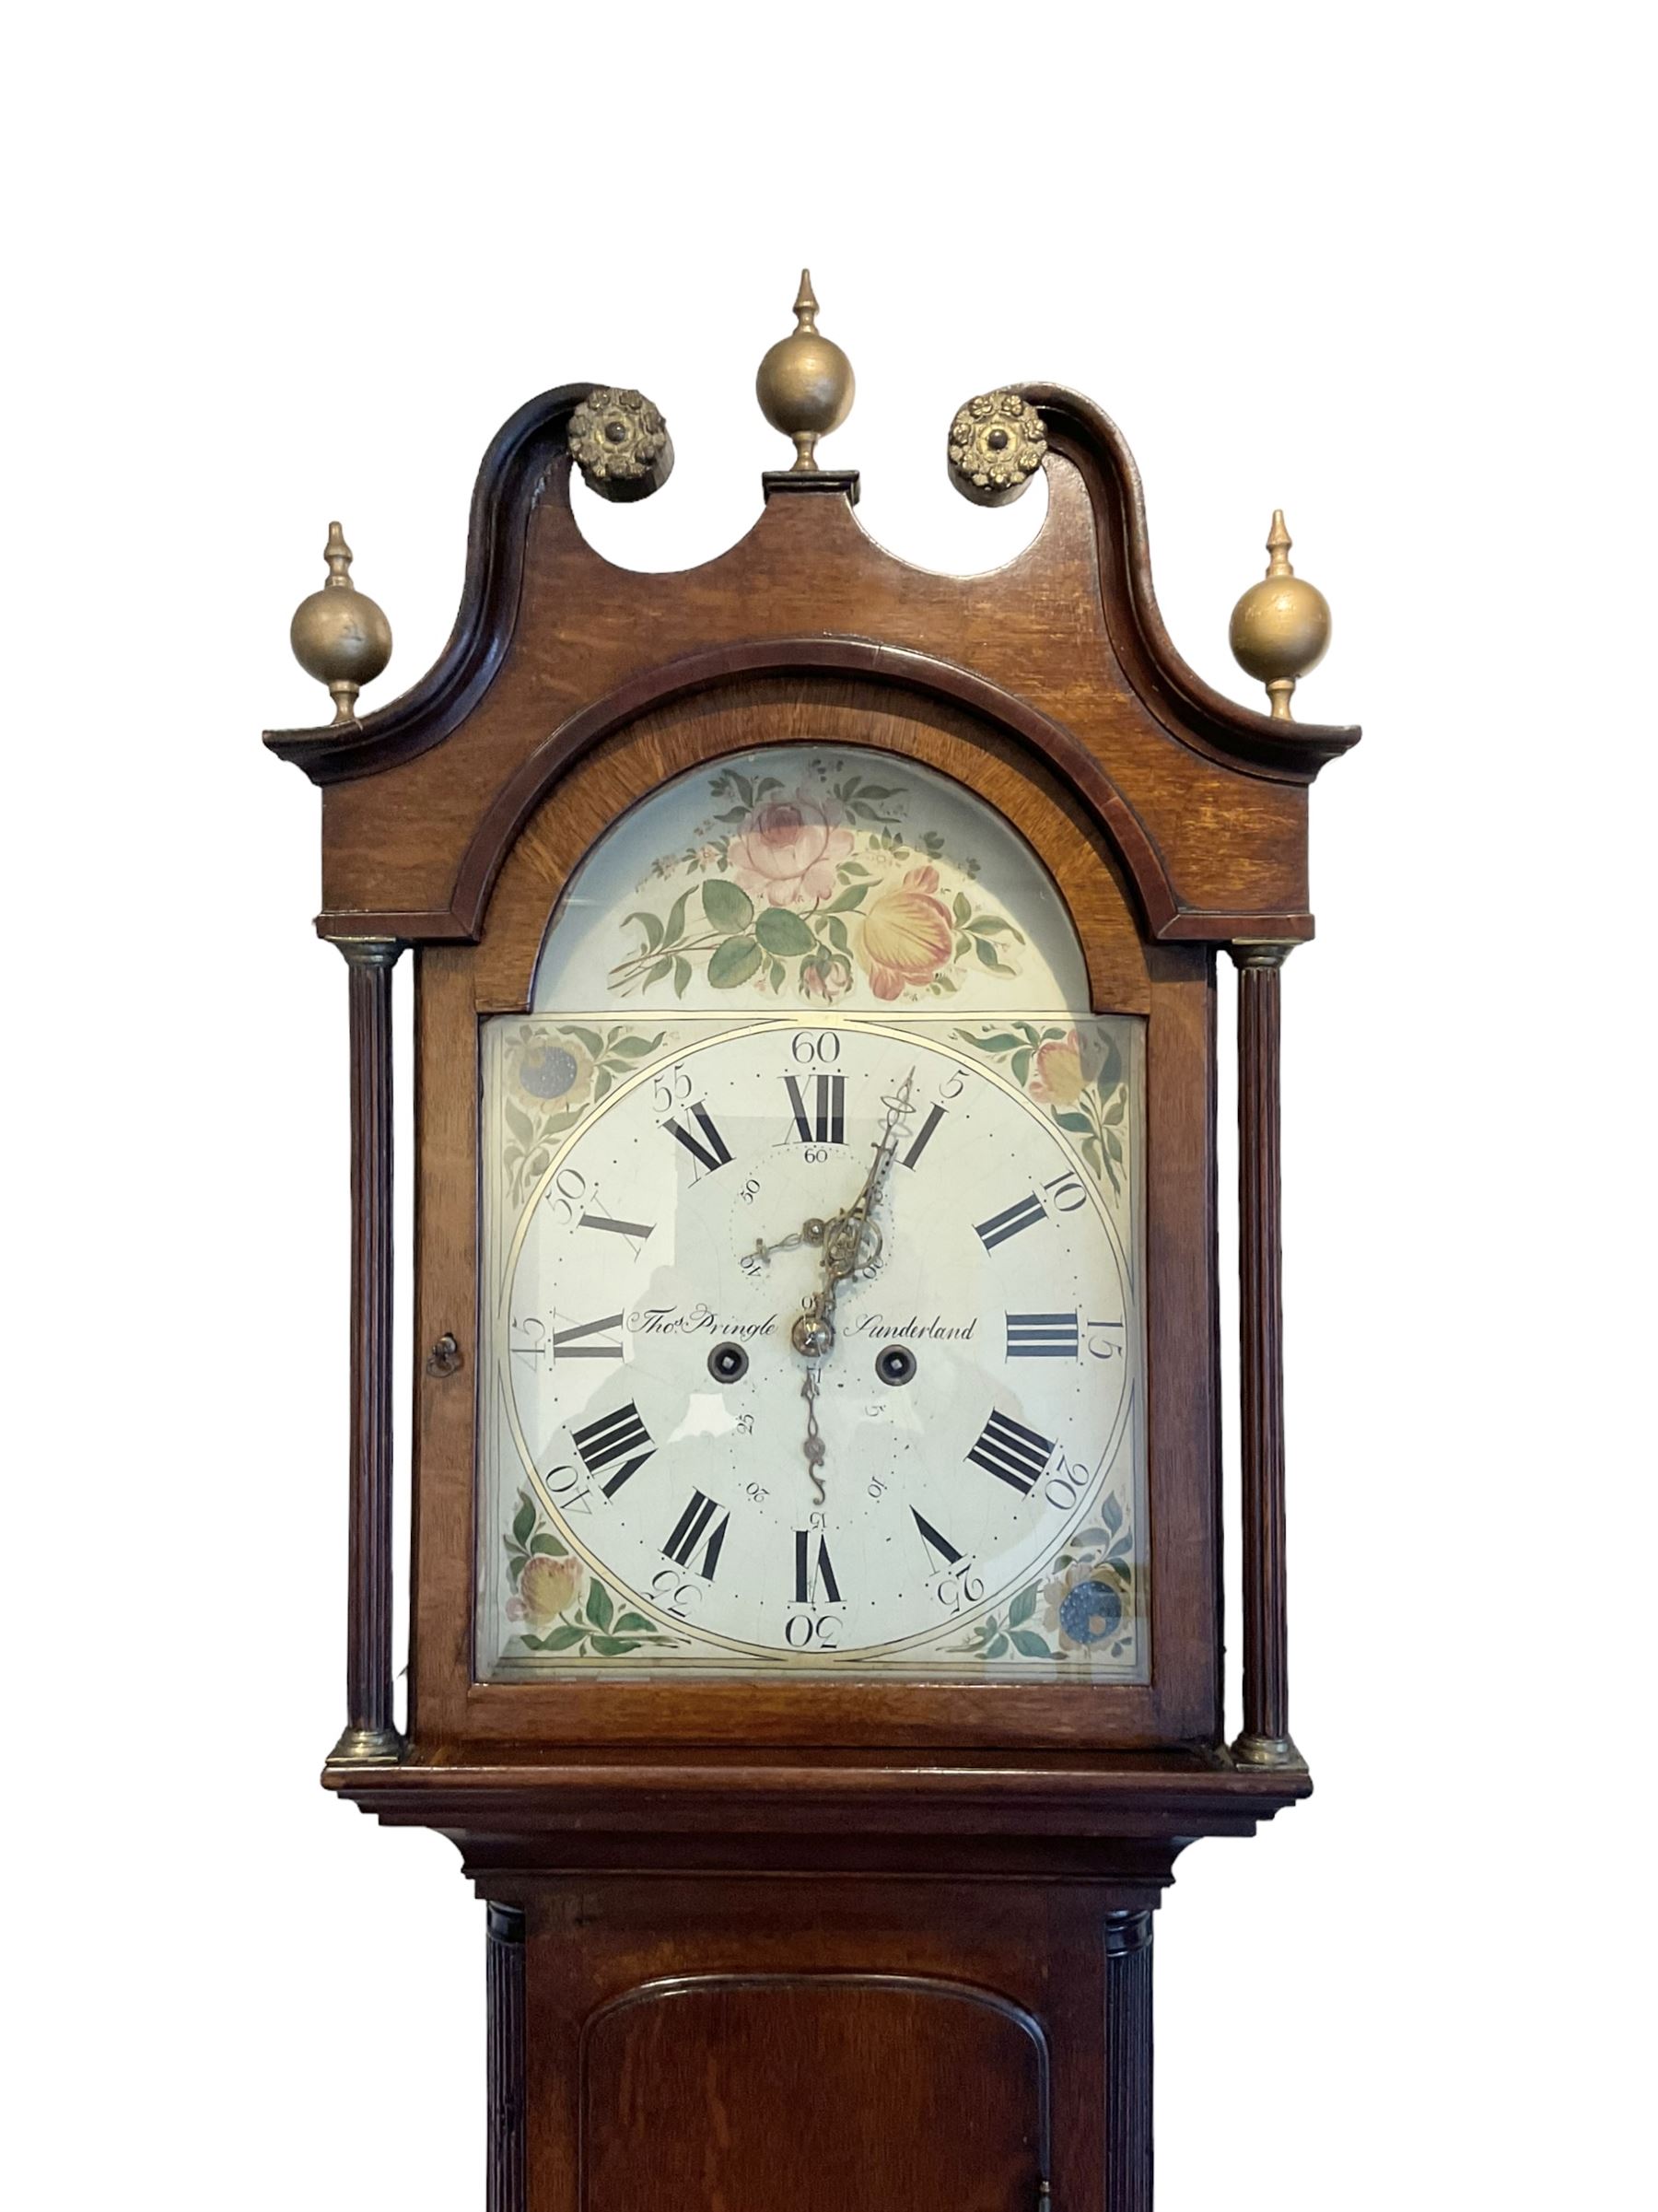 Thomas Pringle of Sunderland - oak cased mid 19th century 8-day longcase clock with a swans neck pe - Image 4 of 6